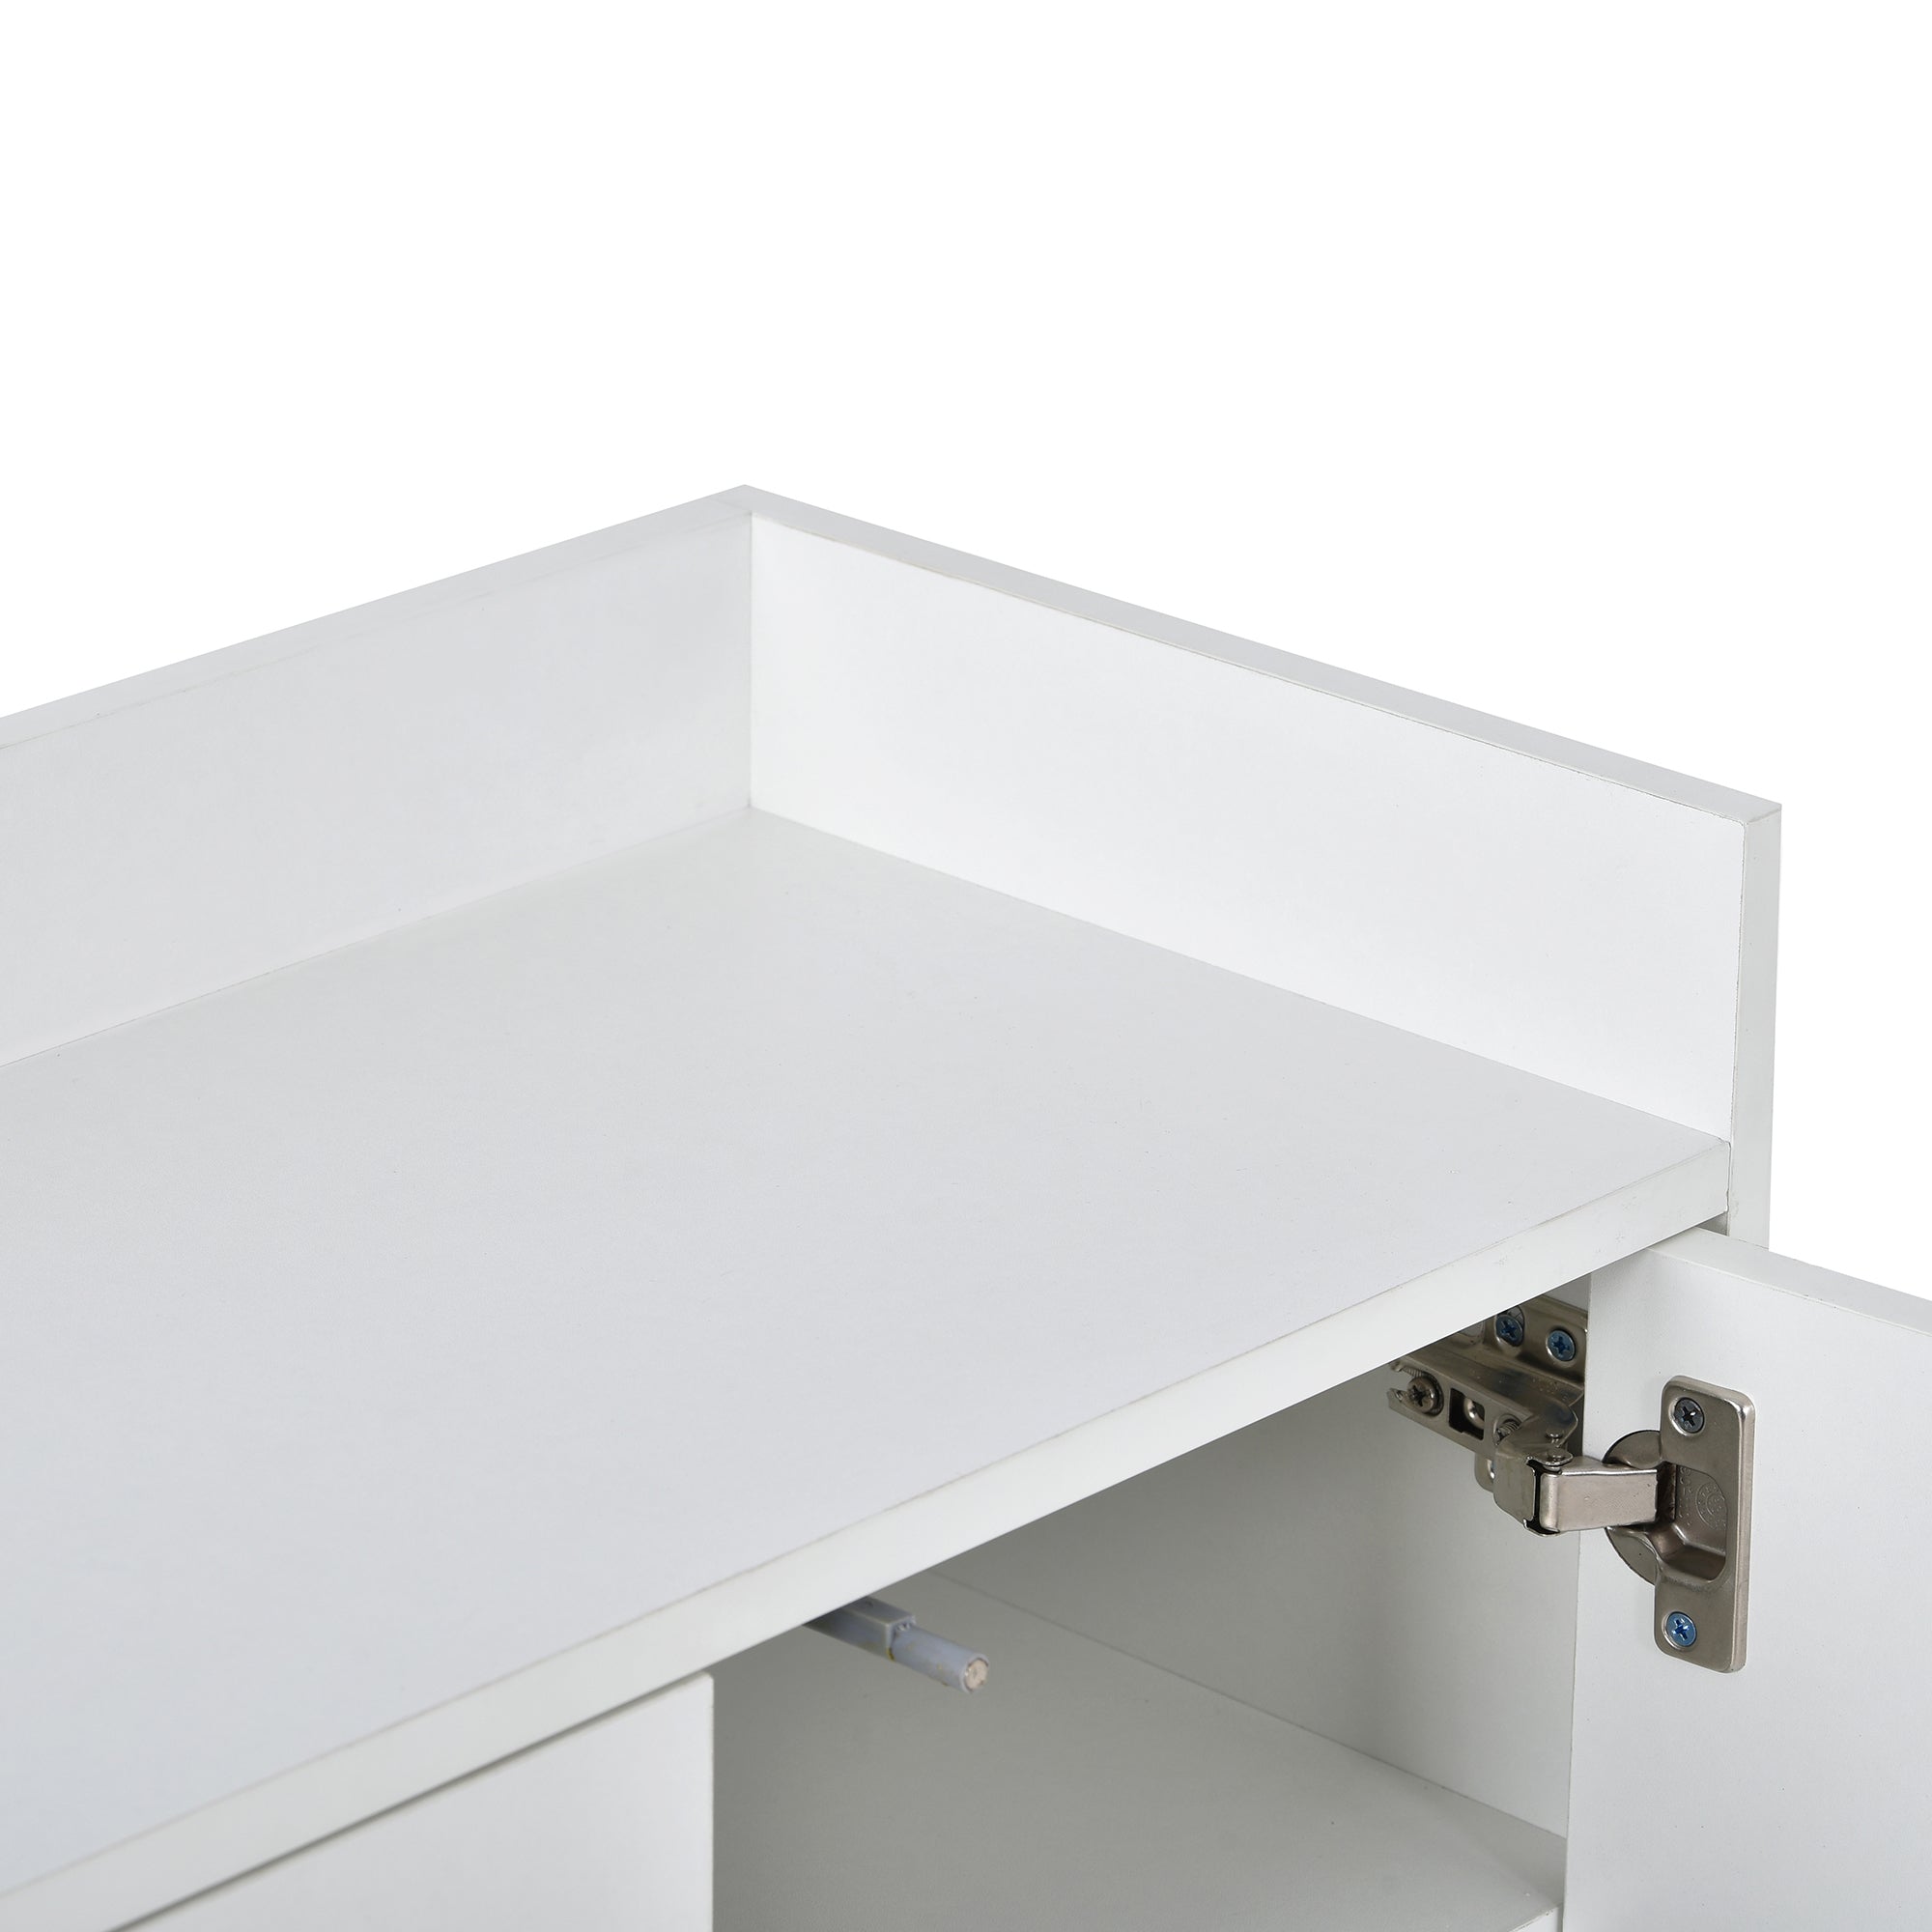 TREXM Sideboard (White)